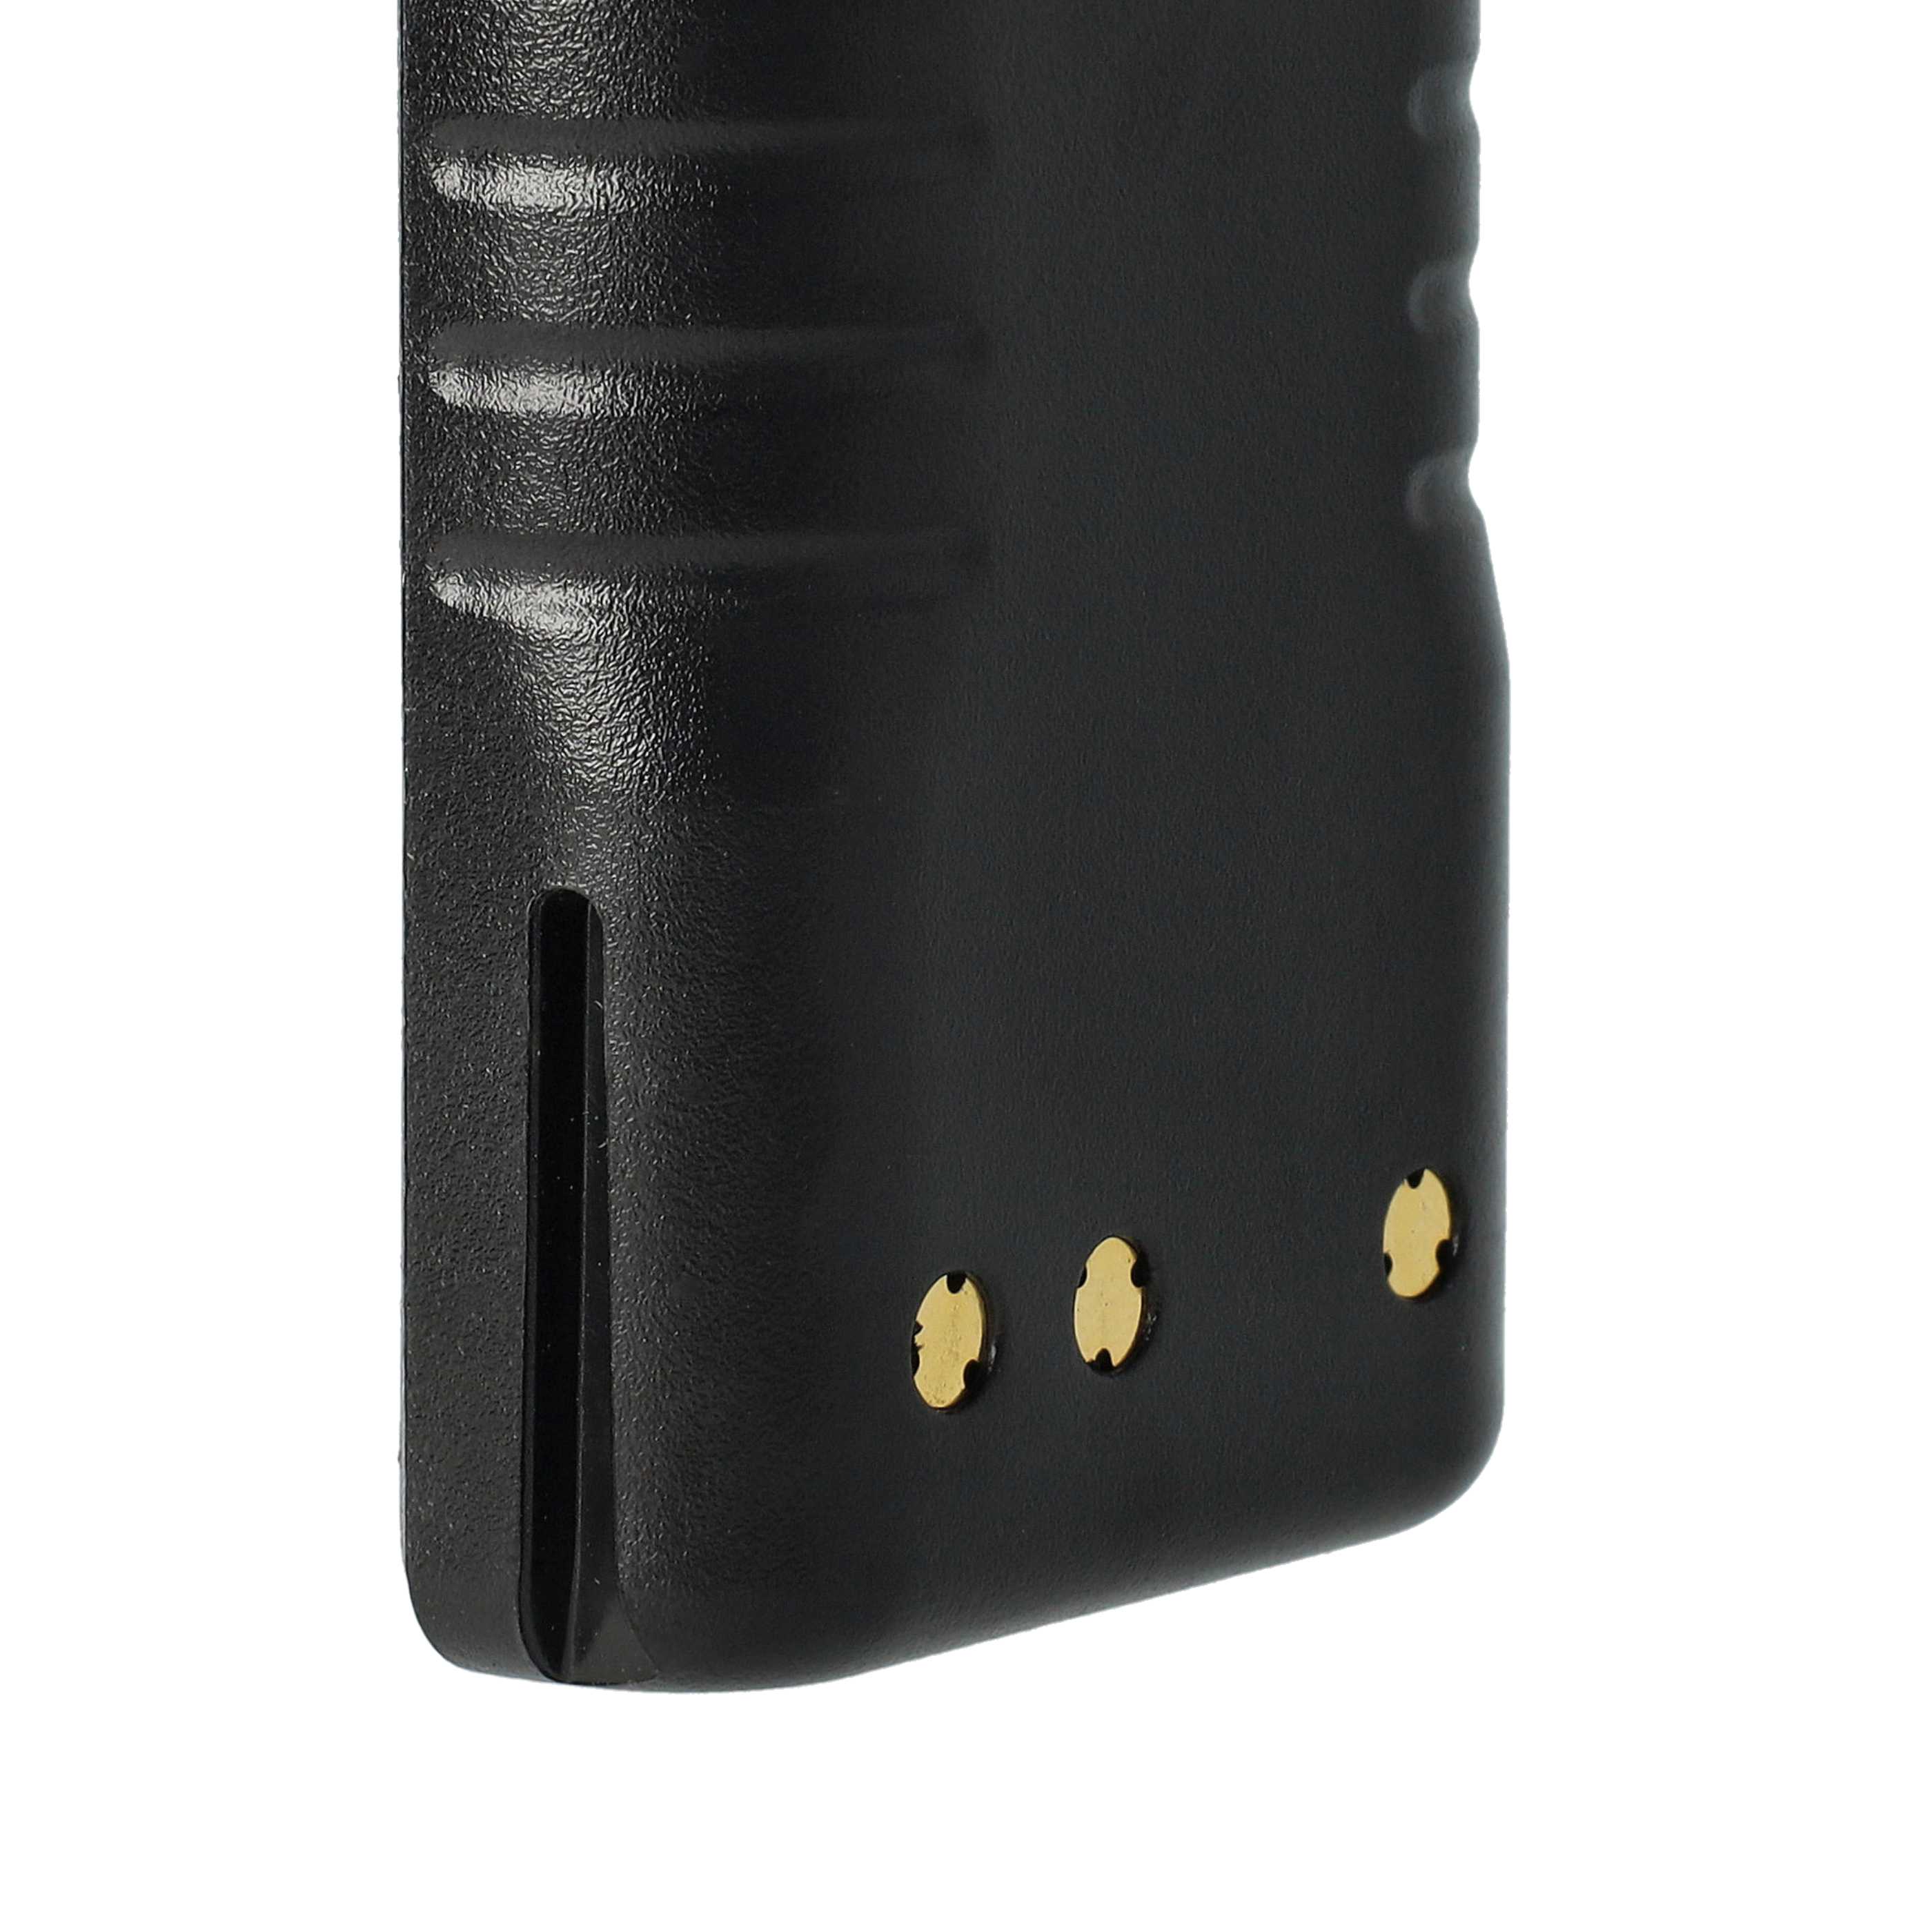 Akumulator do radiotelefonu zamiennik Yaesu / Vertex FNB-V103, FNB-V104, FNB-V103LI - 2600 mAh 7,4 V Li-Ion